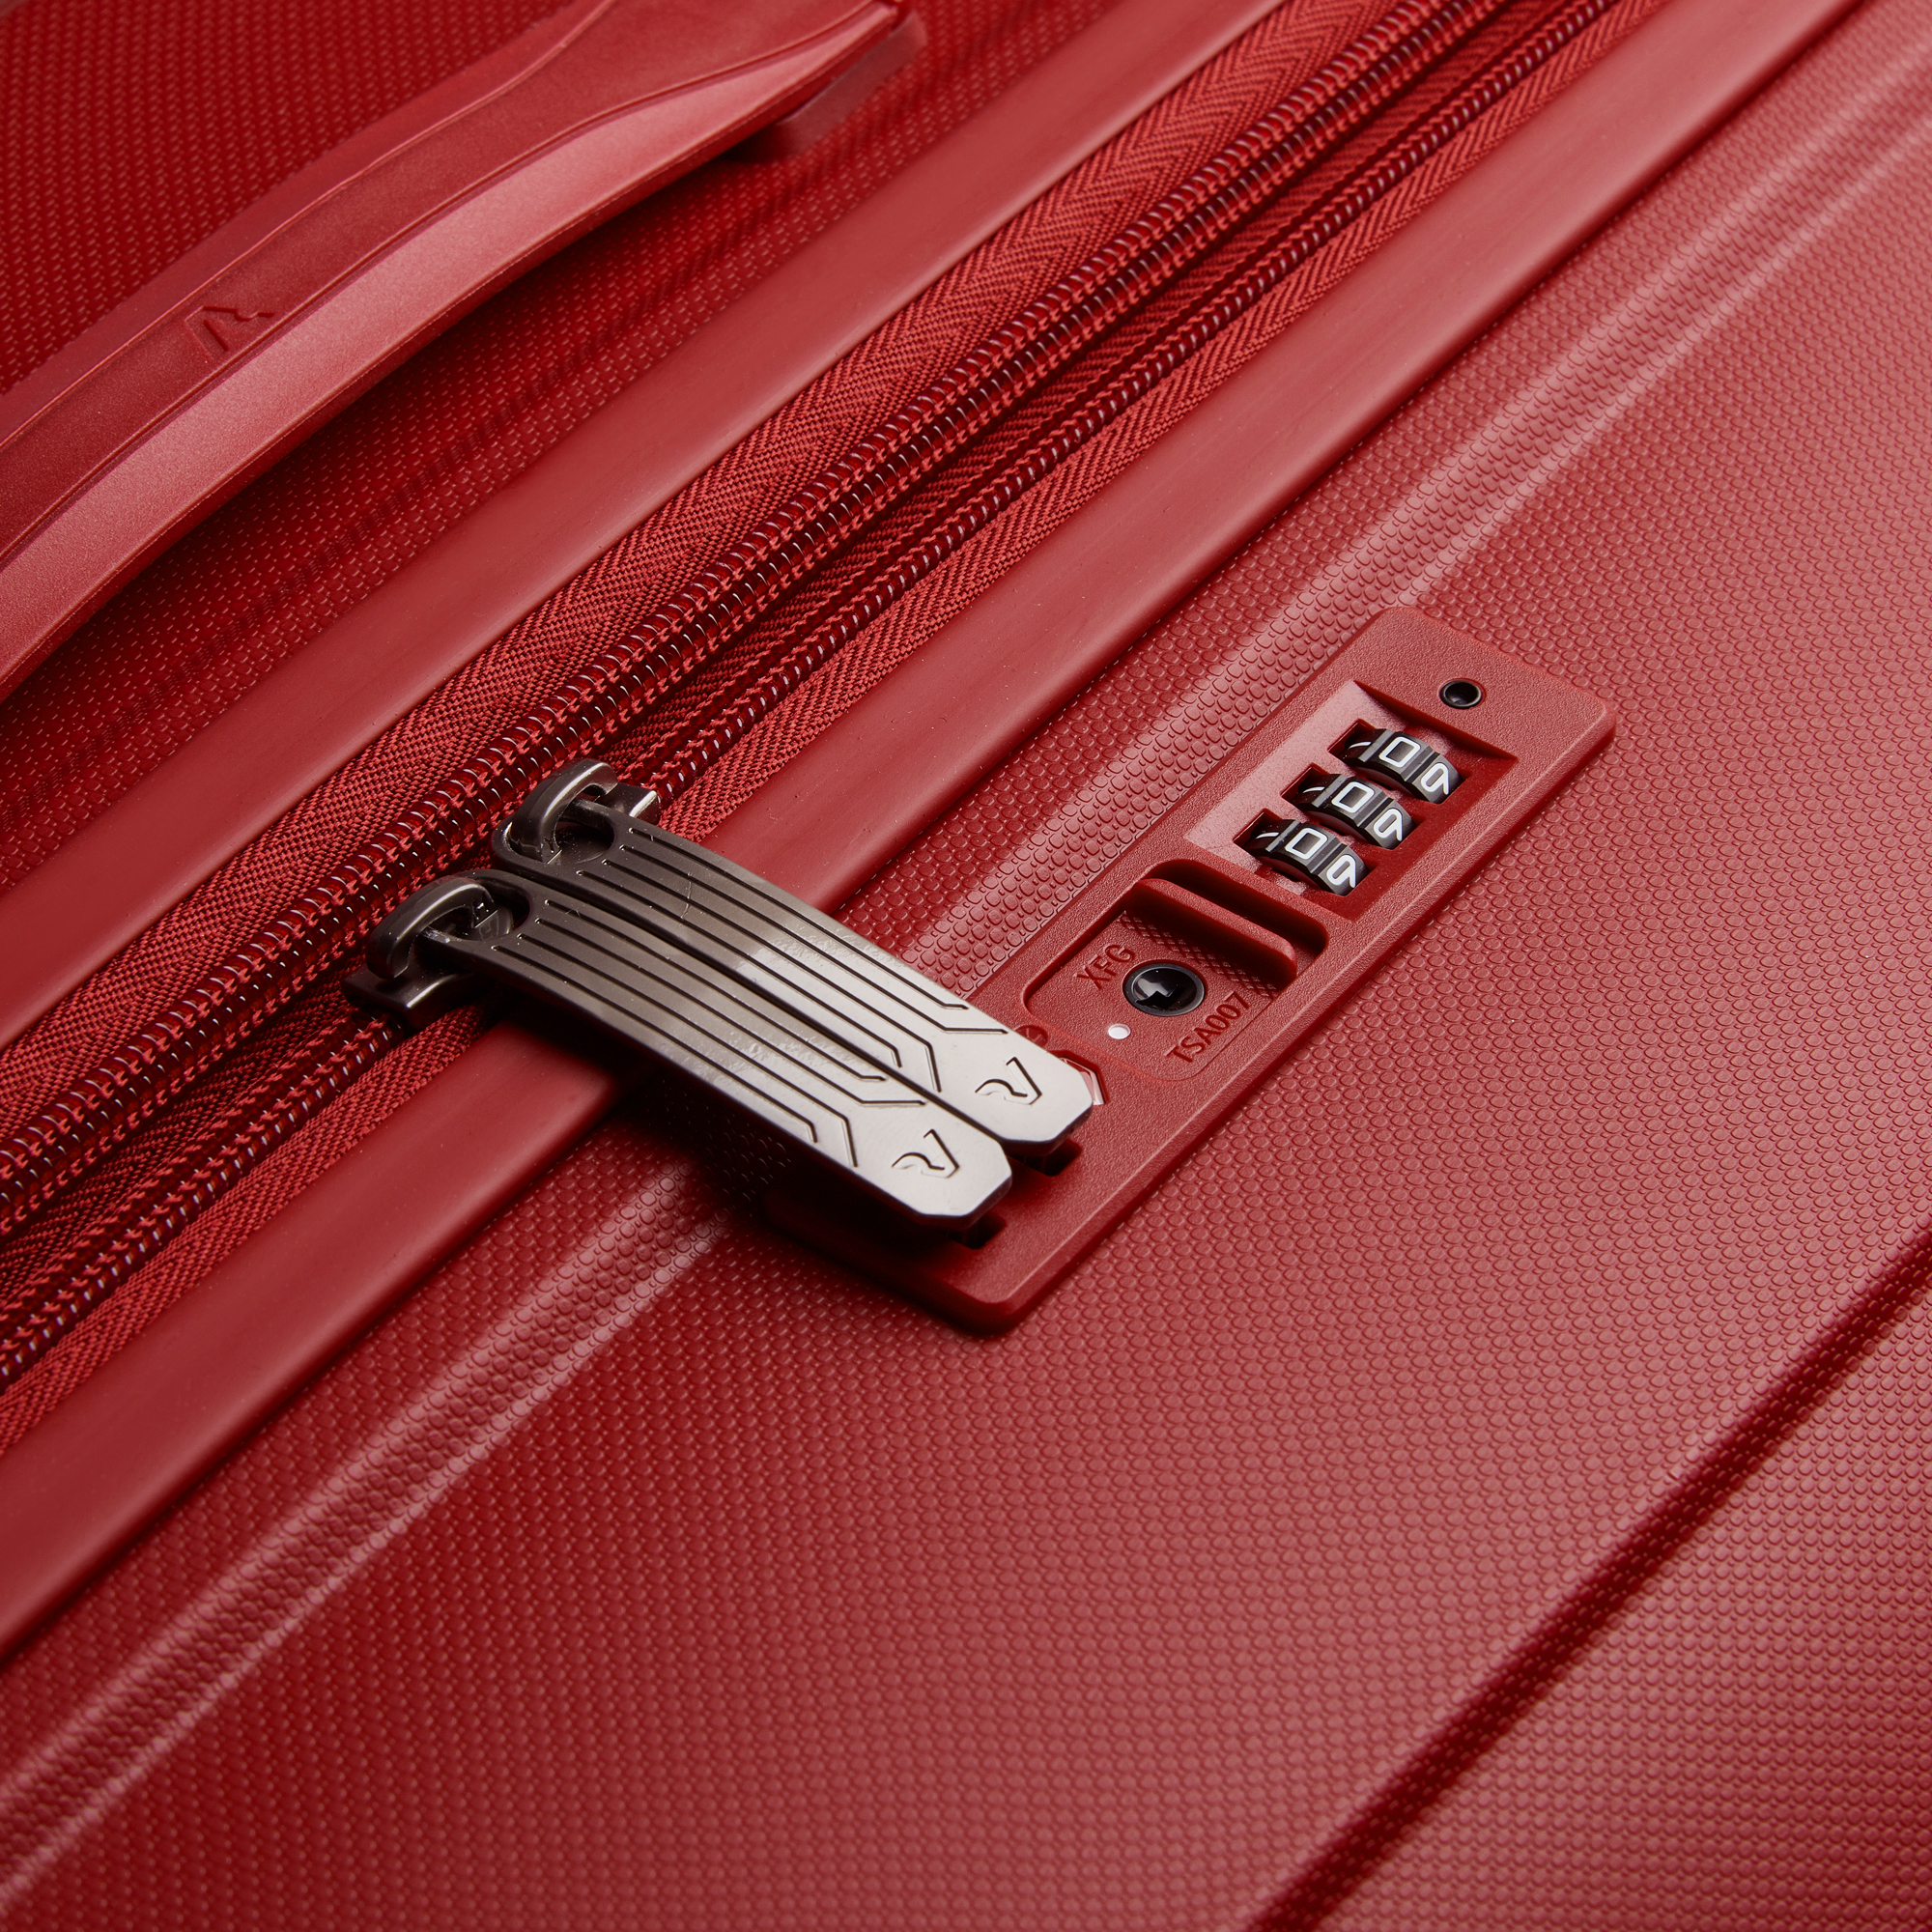 چمدان رونکاتو مدل  BUTTERFLY کد 418183 سایز کابین